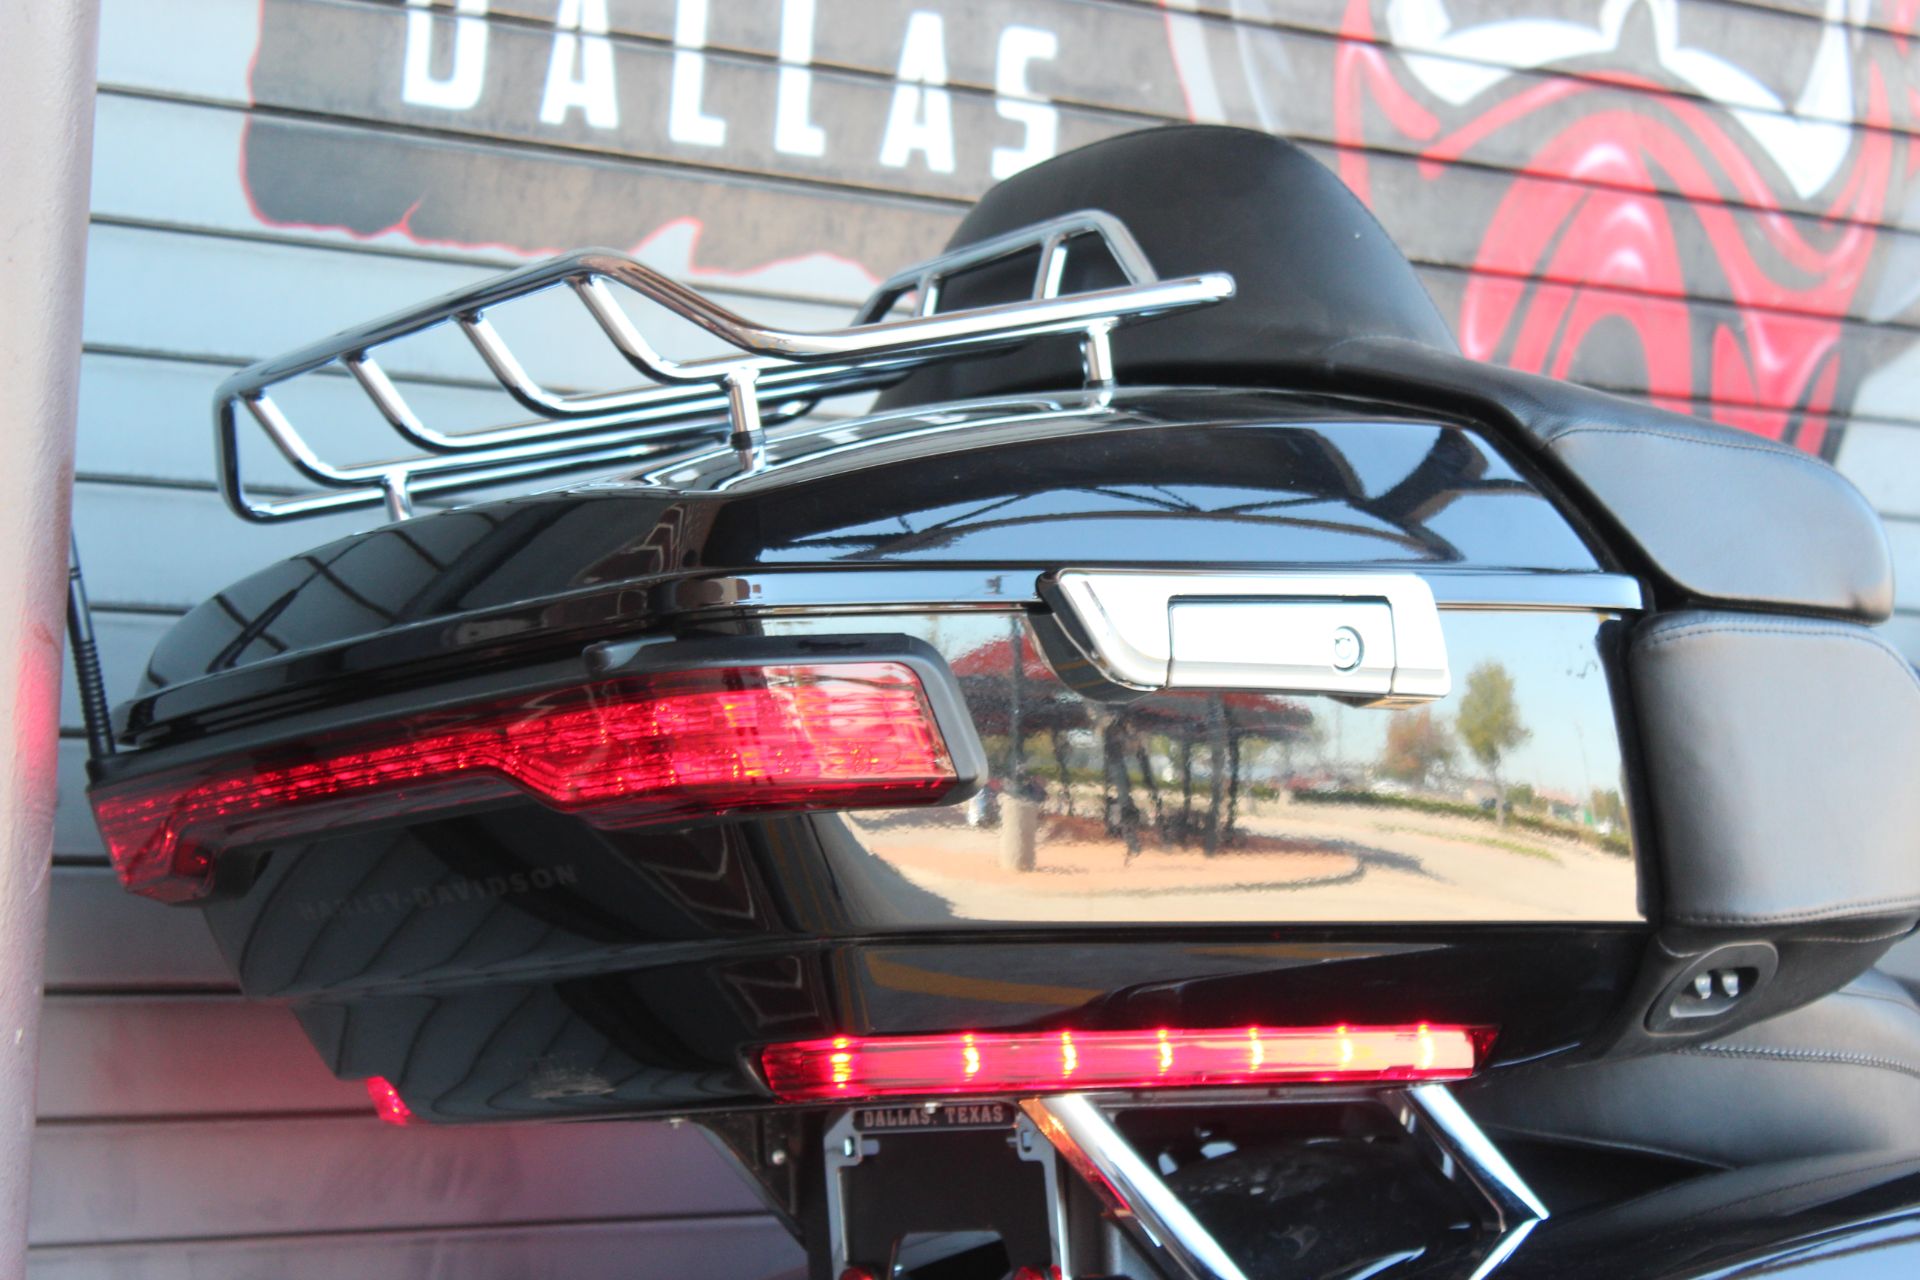 2020 Harley-Davidson Ultra Limited in Carrollton, Texas - Photo 13